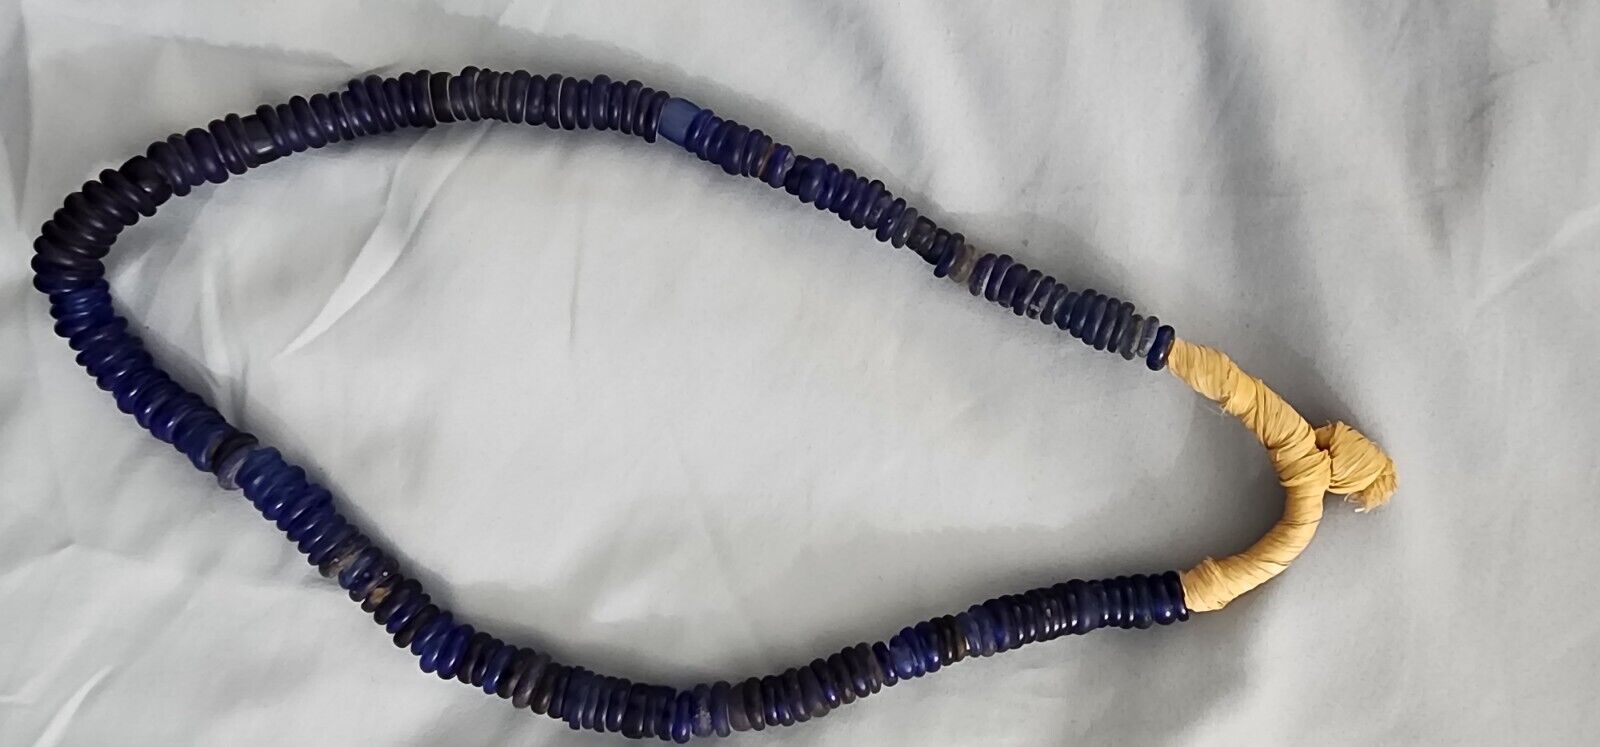 Strand of Russian Blue Cobalt Beads